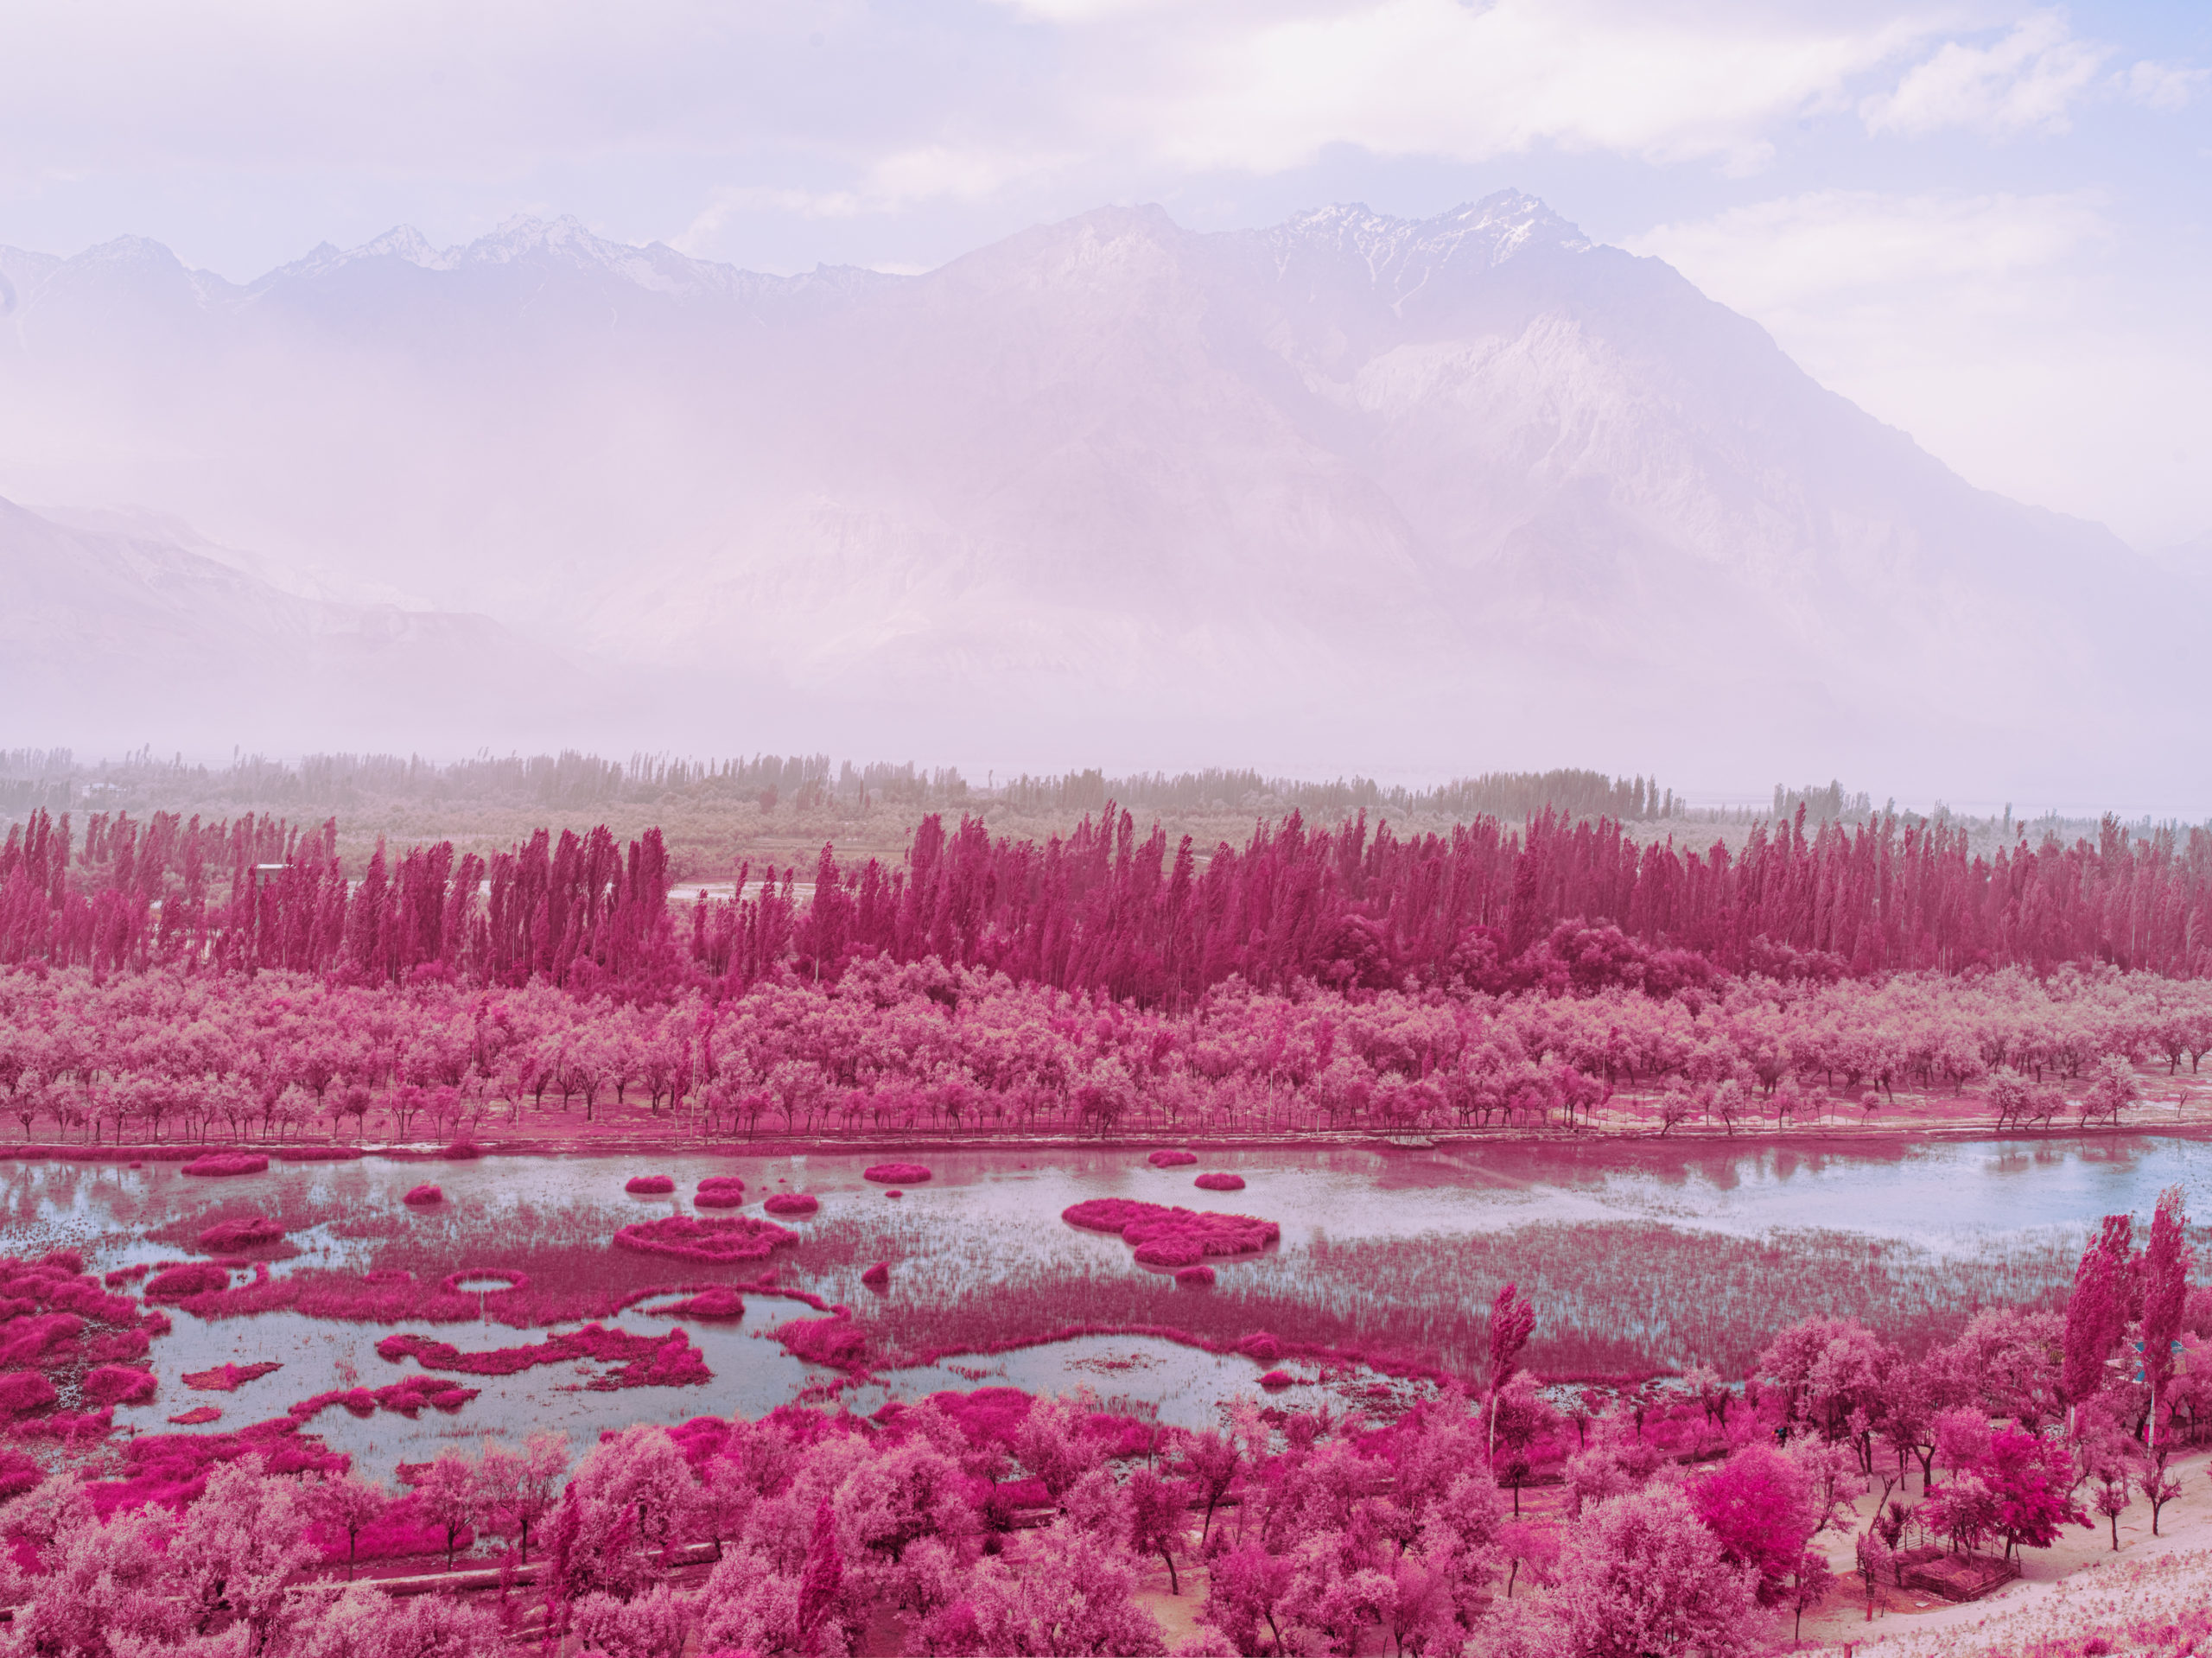 A view of the river running through Katpana desert shot in infrared.